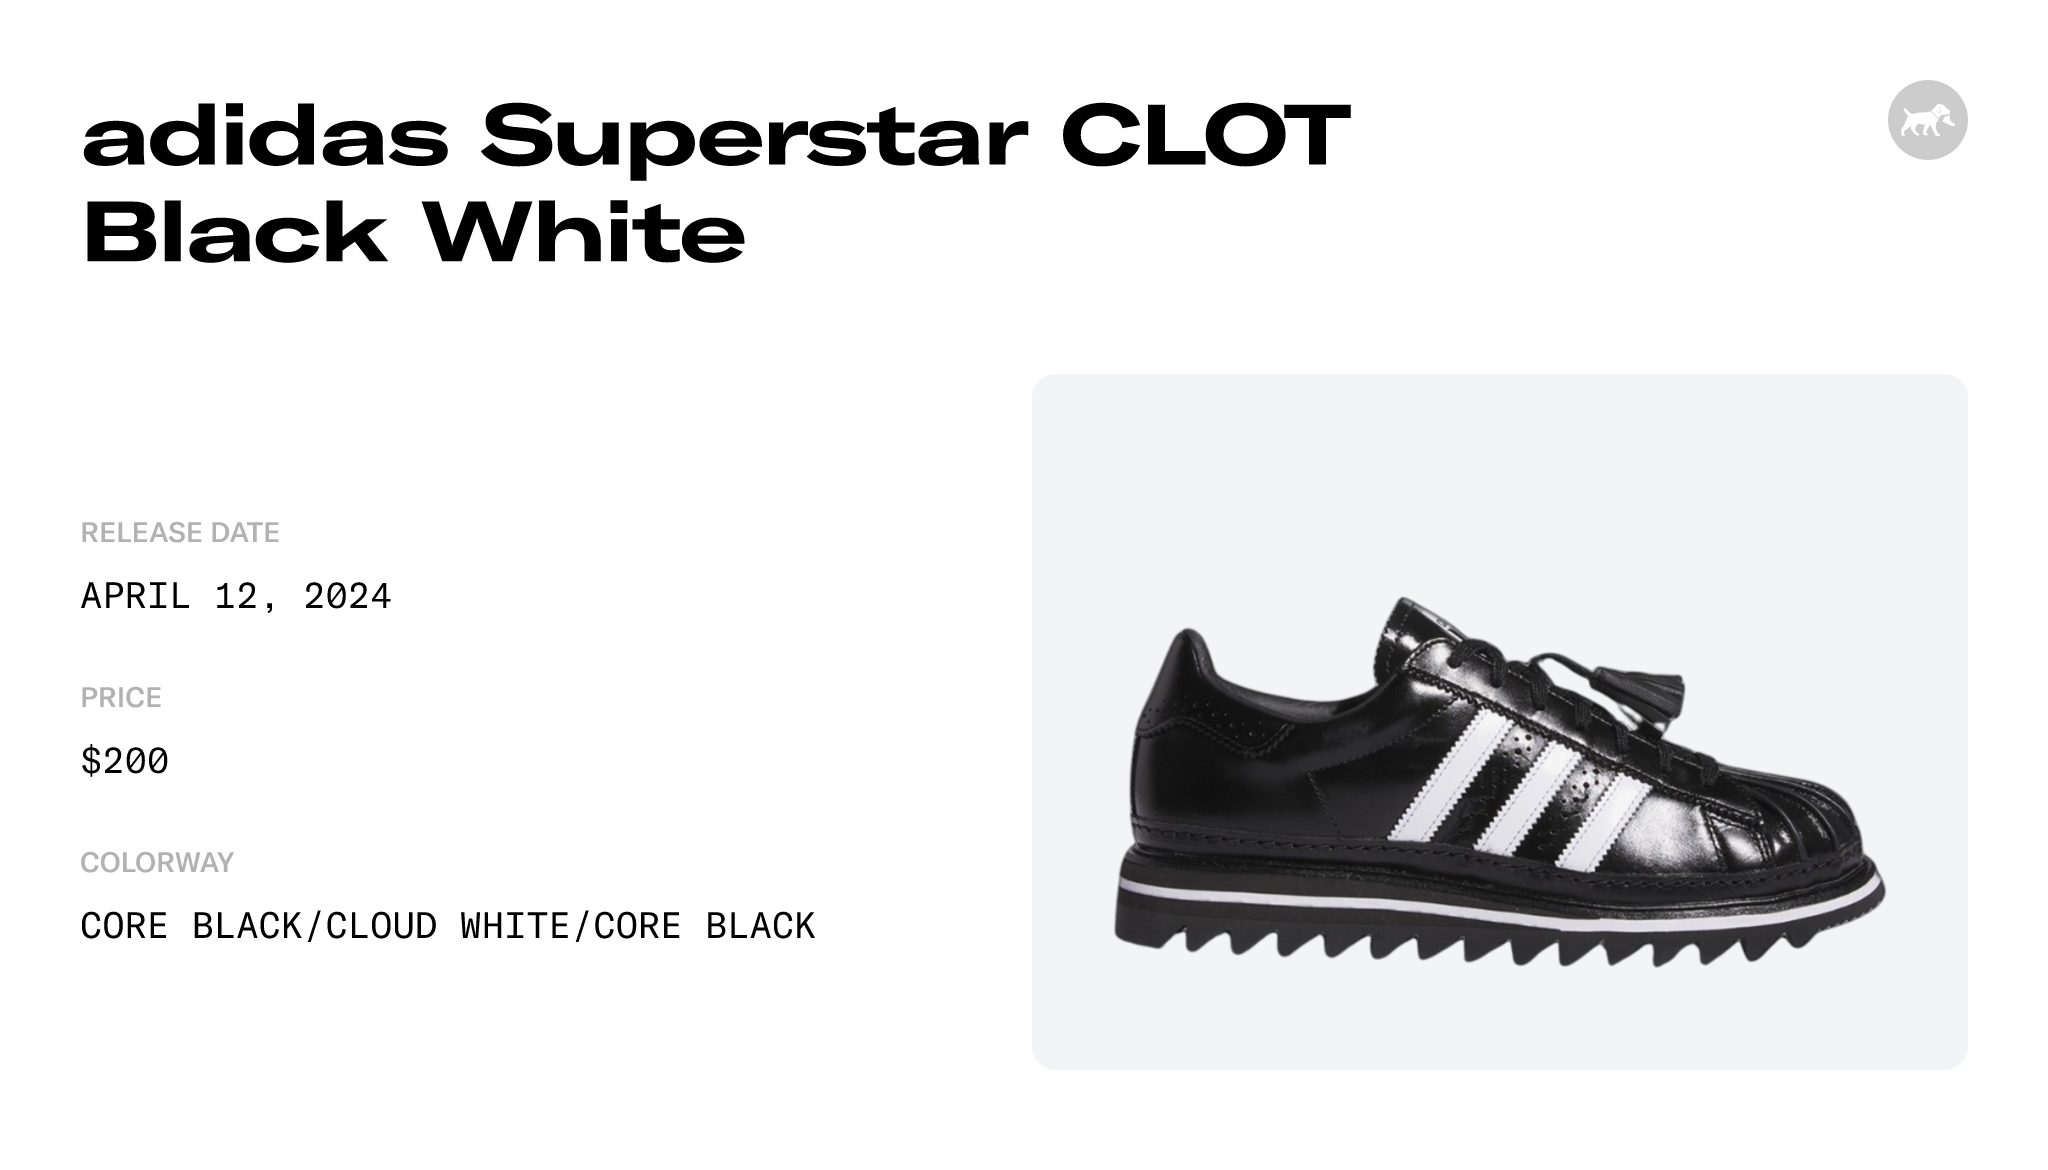 adidas Superstar CLOT Black White - IH5953 Raffles and Release Date